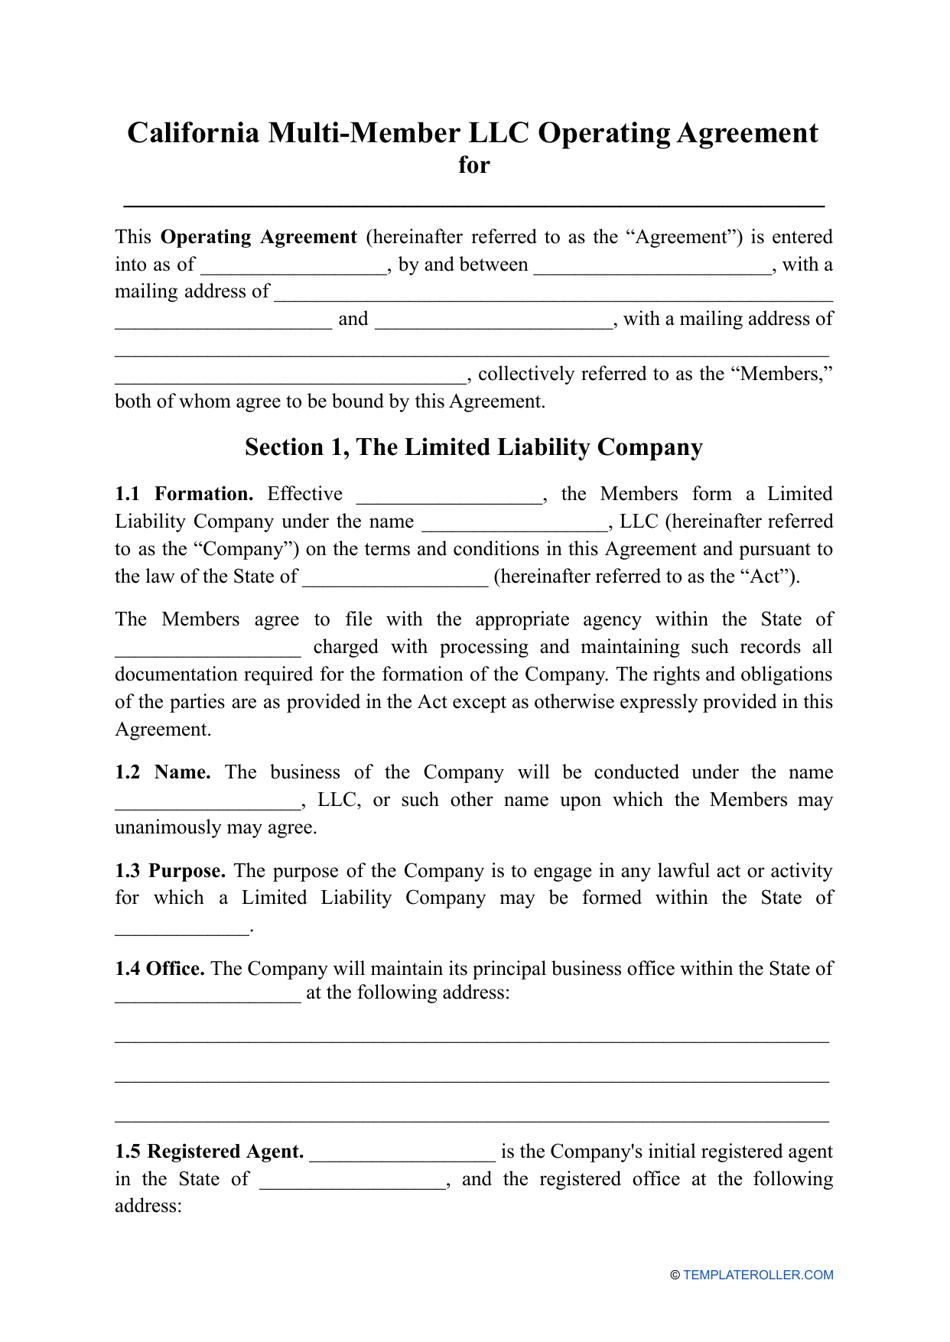 Multi-Member LLC Operating Agreement Template - California, Page 1